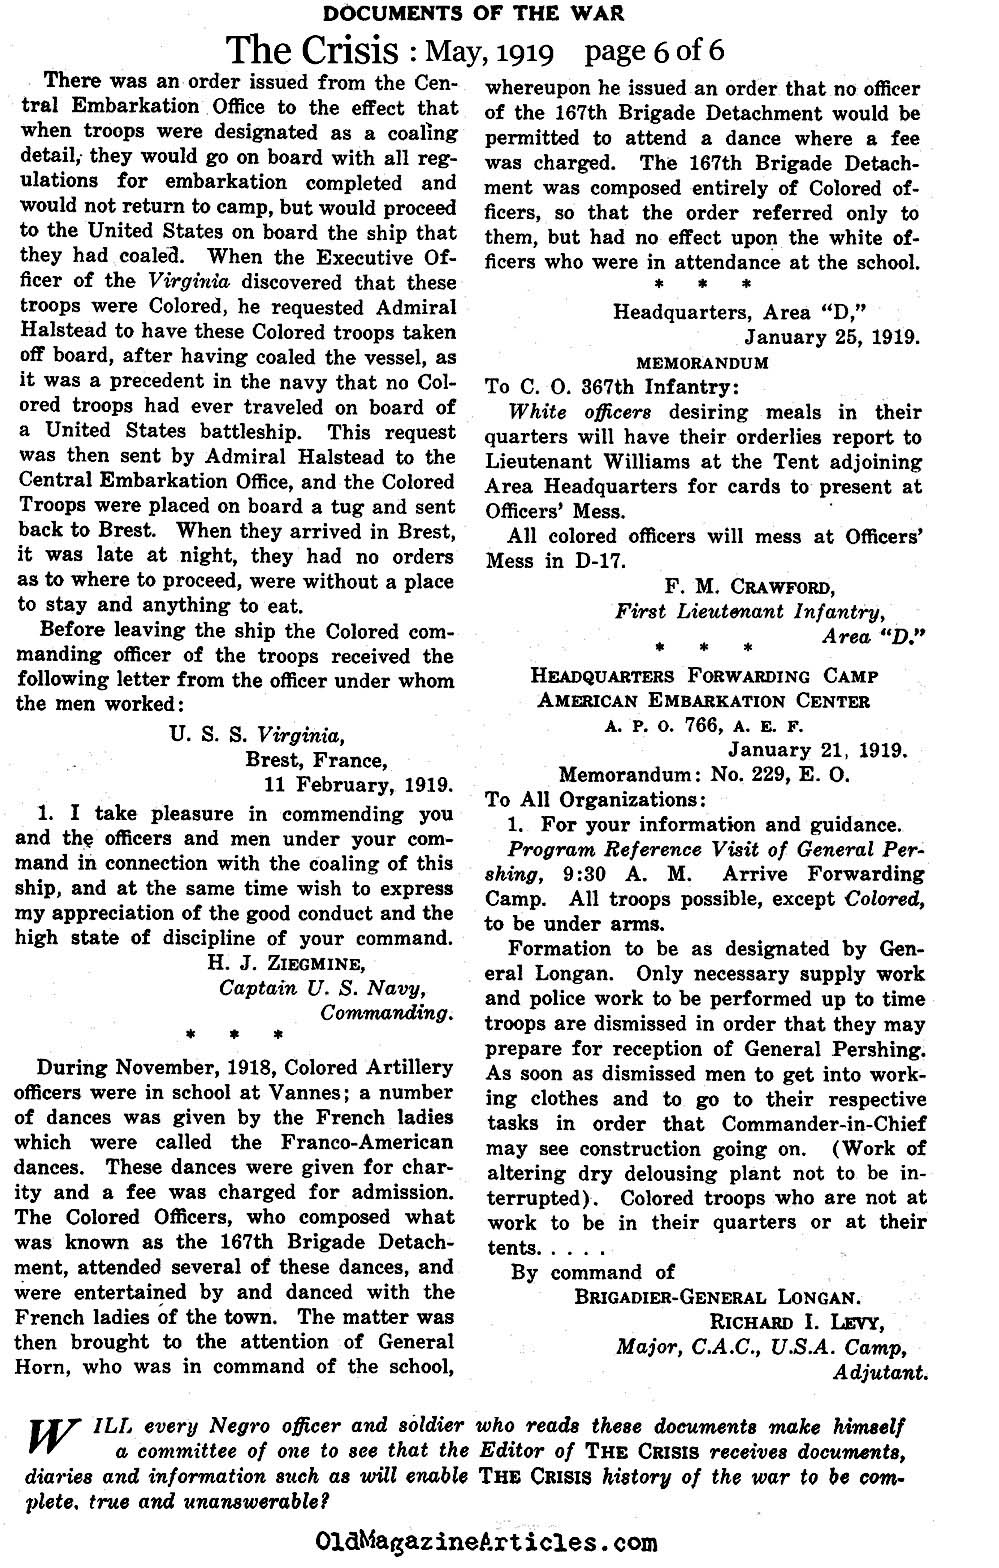 W.E.B. Du Boise and the Documents of U.S. Army Prejudice  (The Crises, 1919